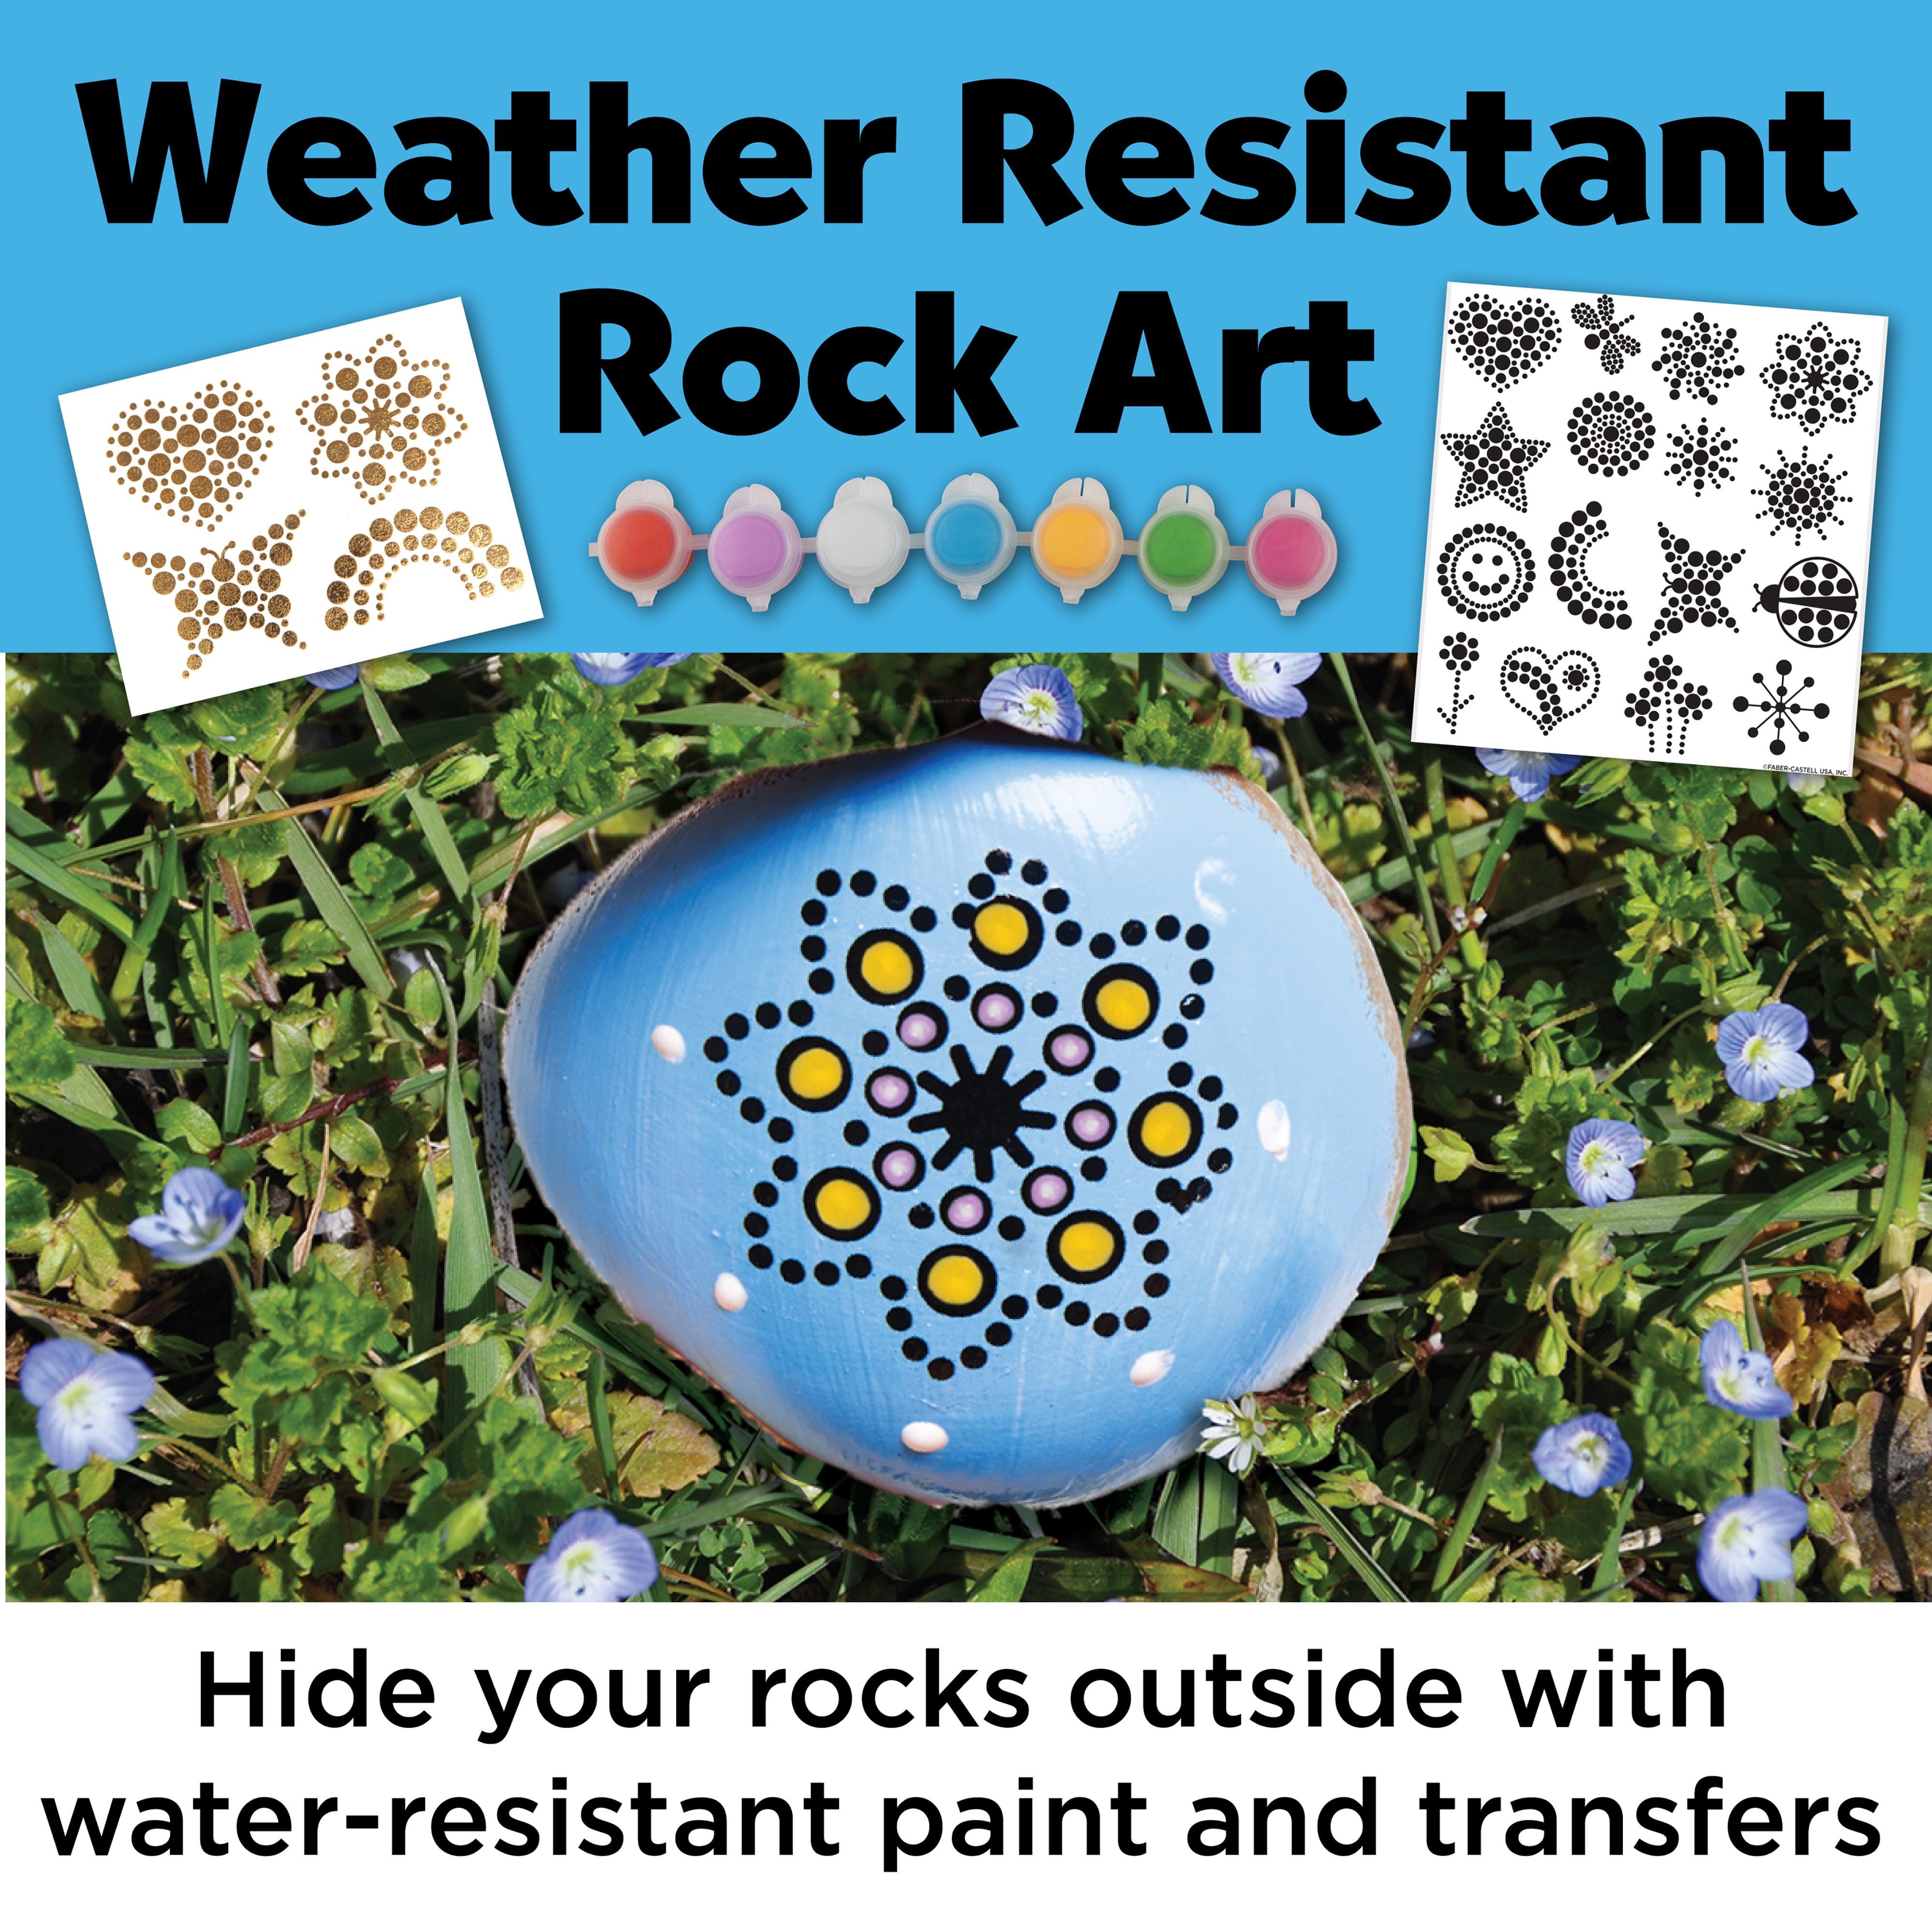 Creativity for Kids® Mandala Dot-a-Rock Painting Kit